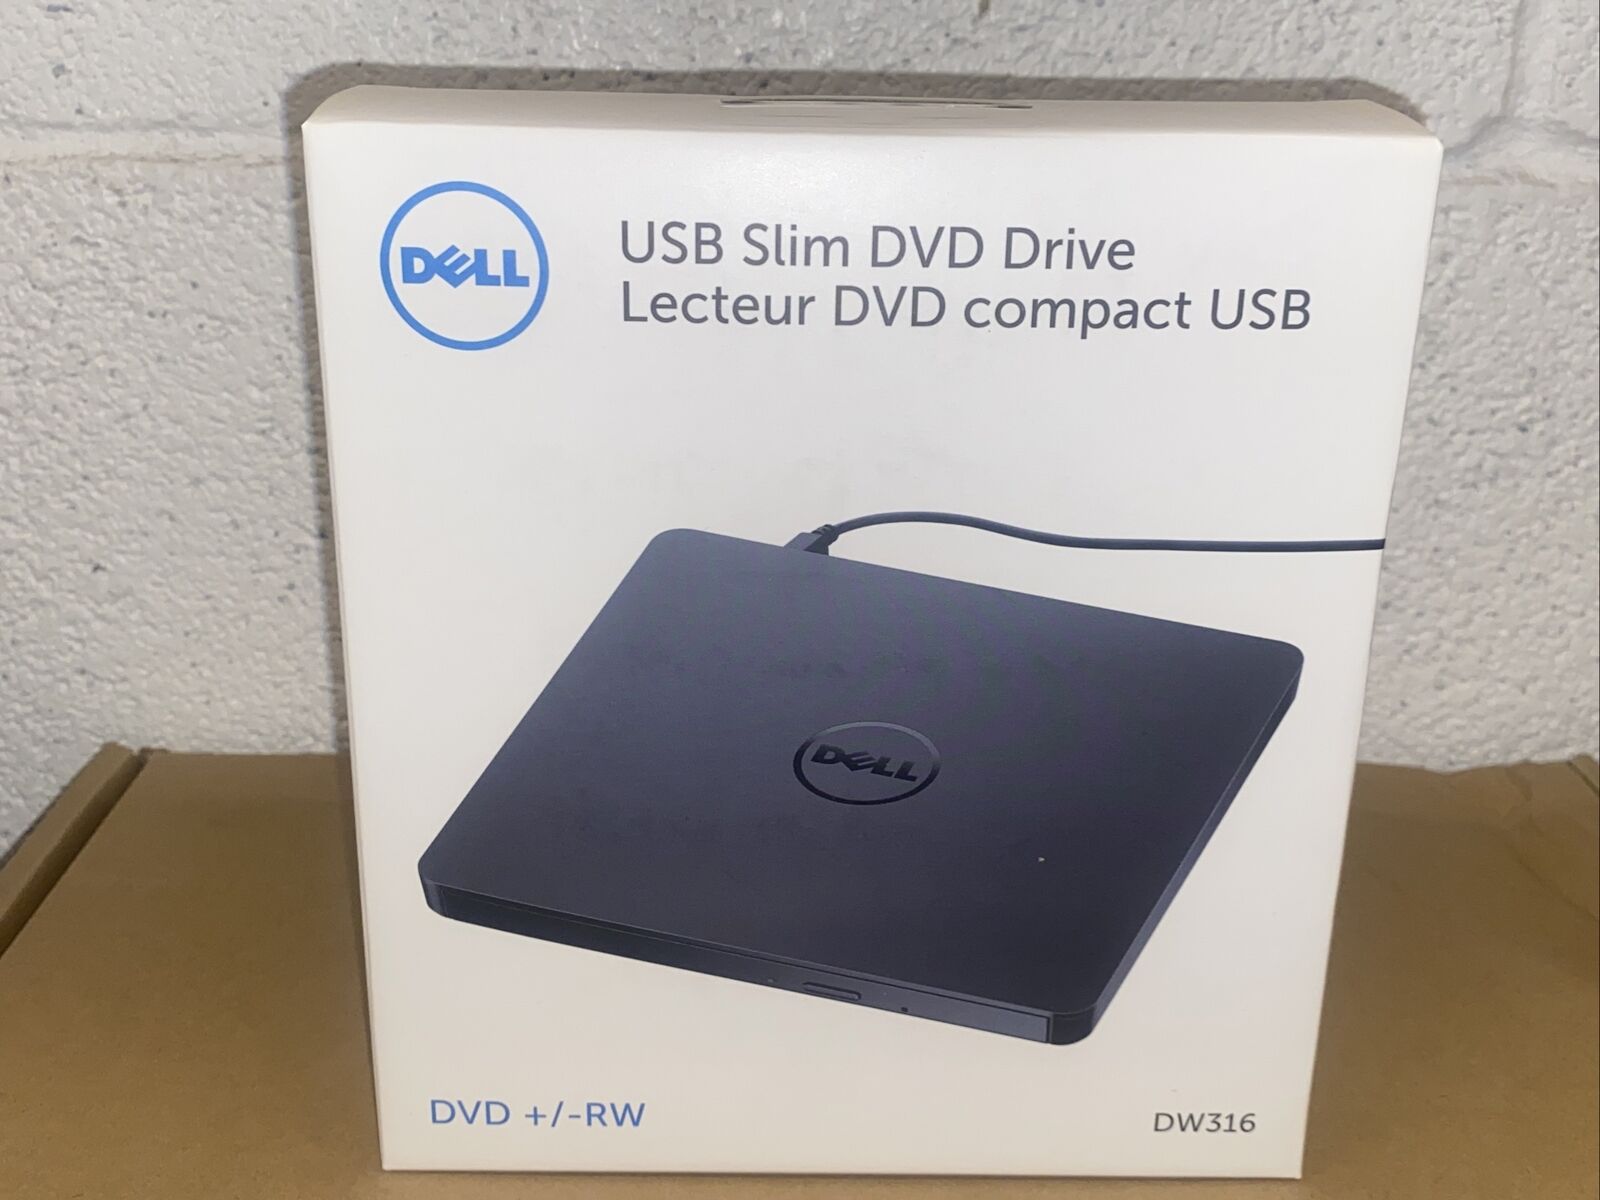 Lot of 14 - NEW - Dell - USB Slim DVD+/-RW Drive - Plug and Play - DW316 - Black